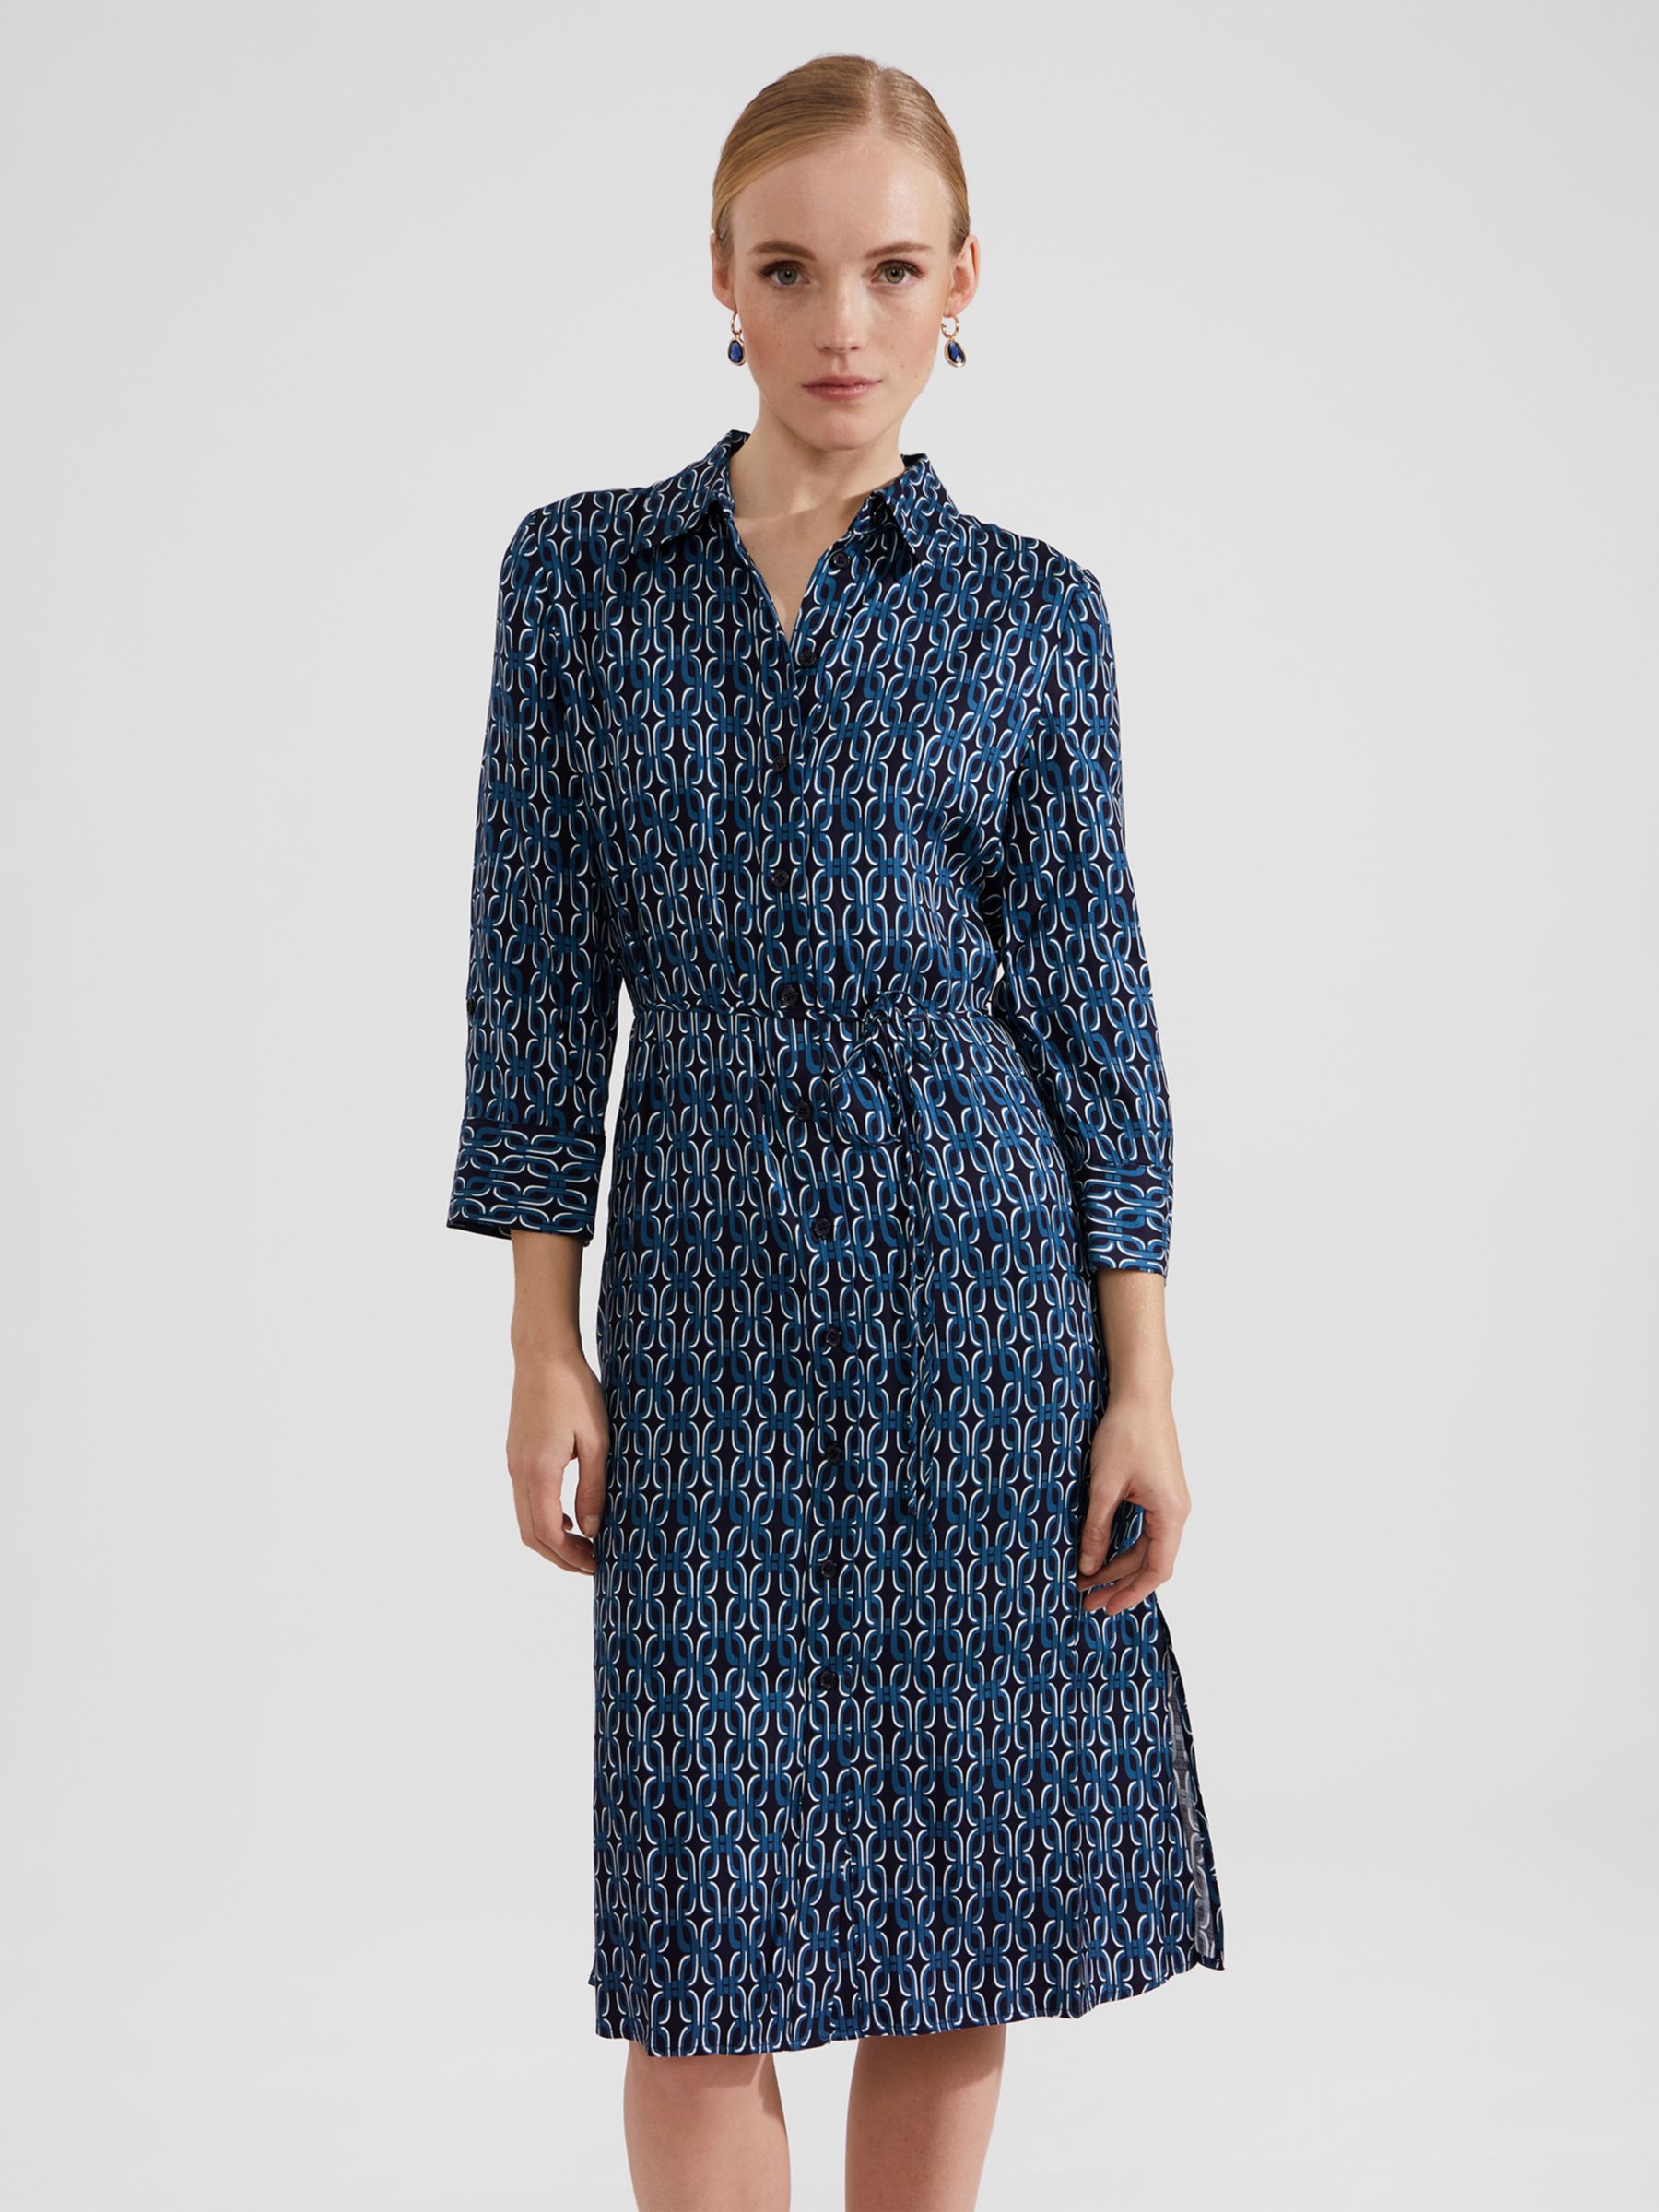 Hobbs Cali Chain Print Shirt Dress, Blue/Multi at John Lewis & Partners